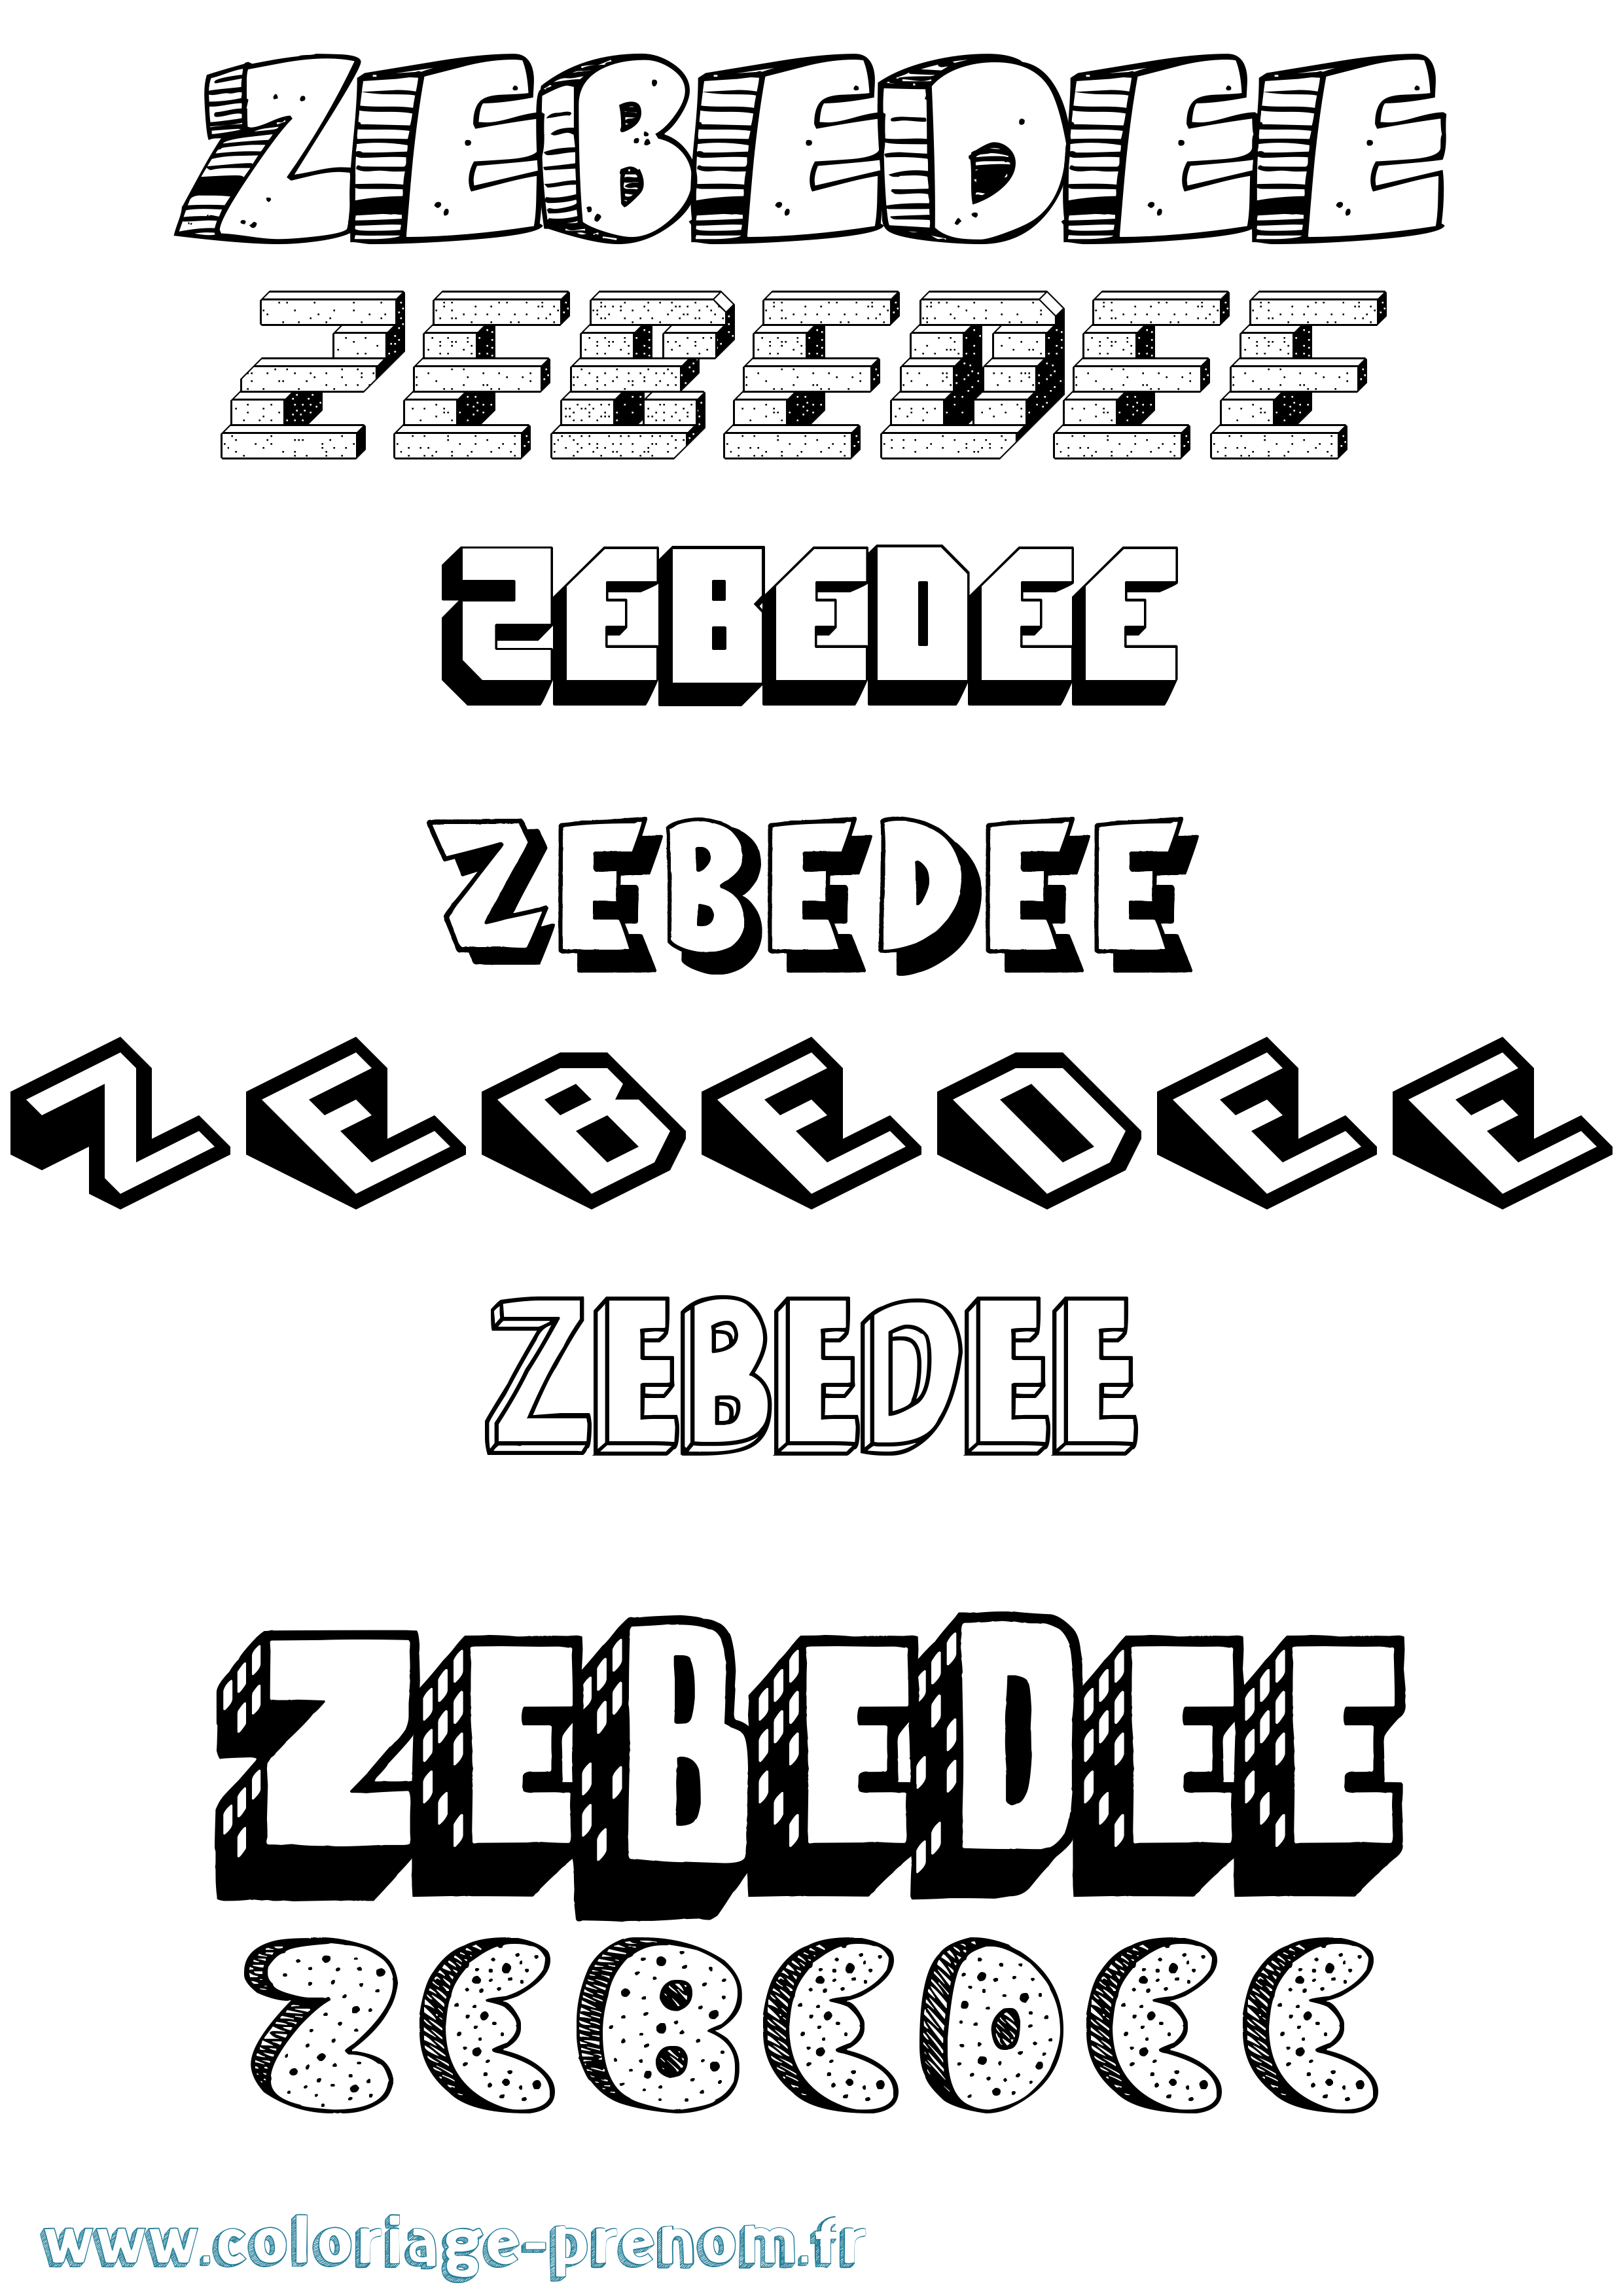 Coloriage prénom Zebedee Effet 3D